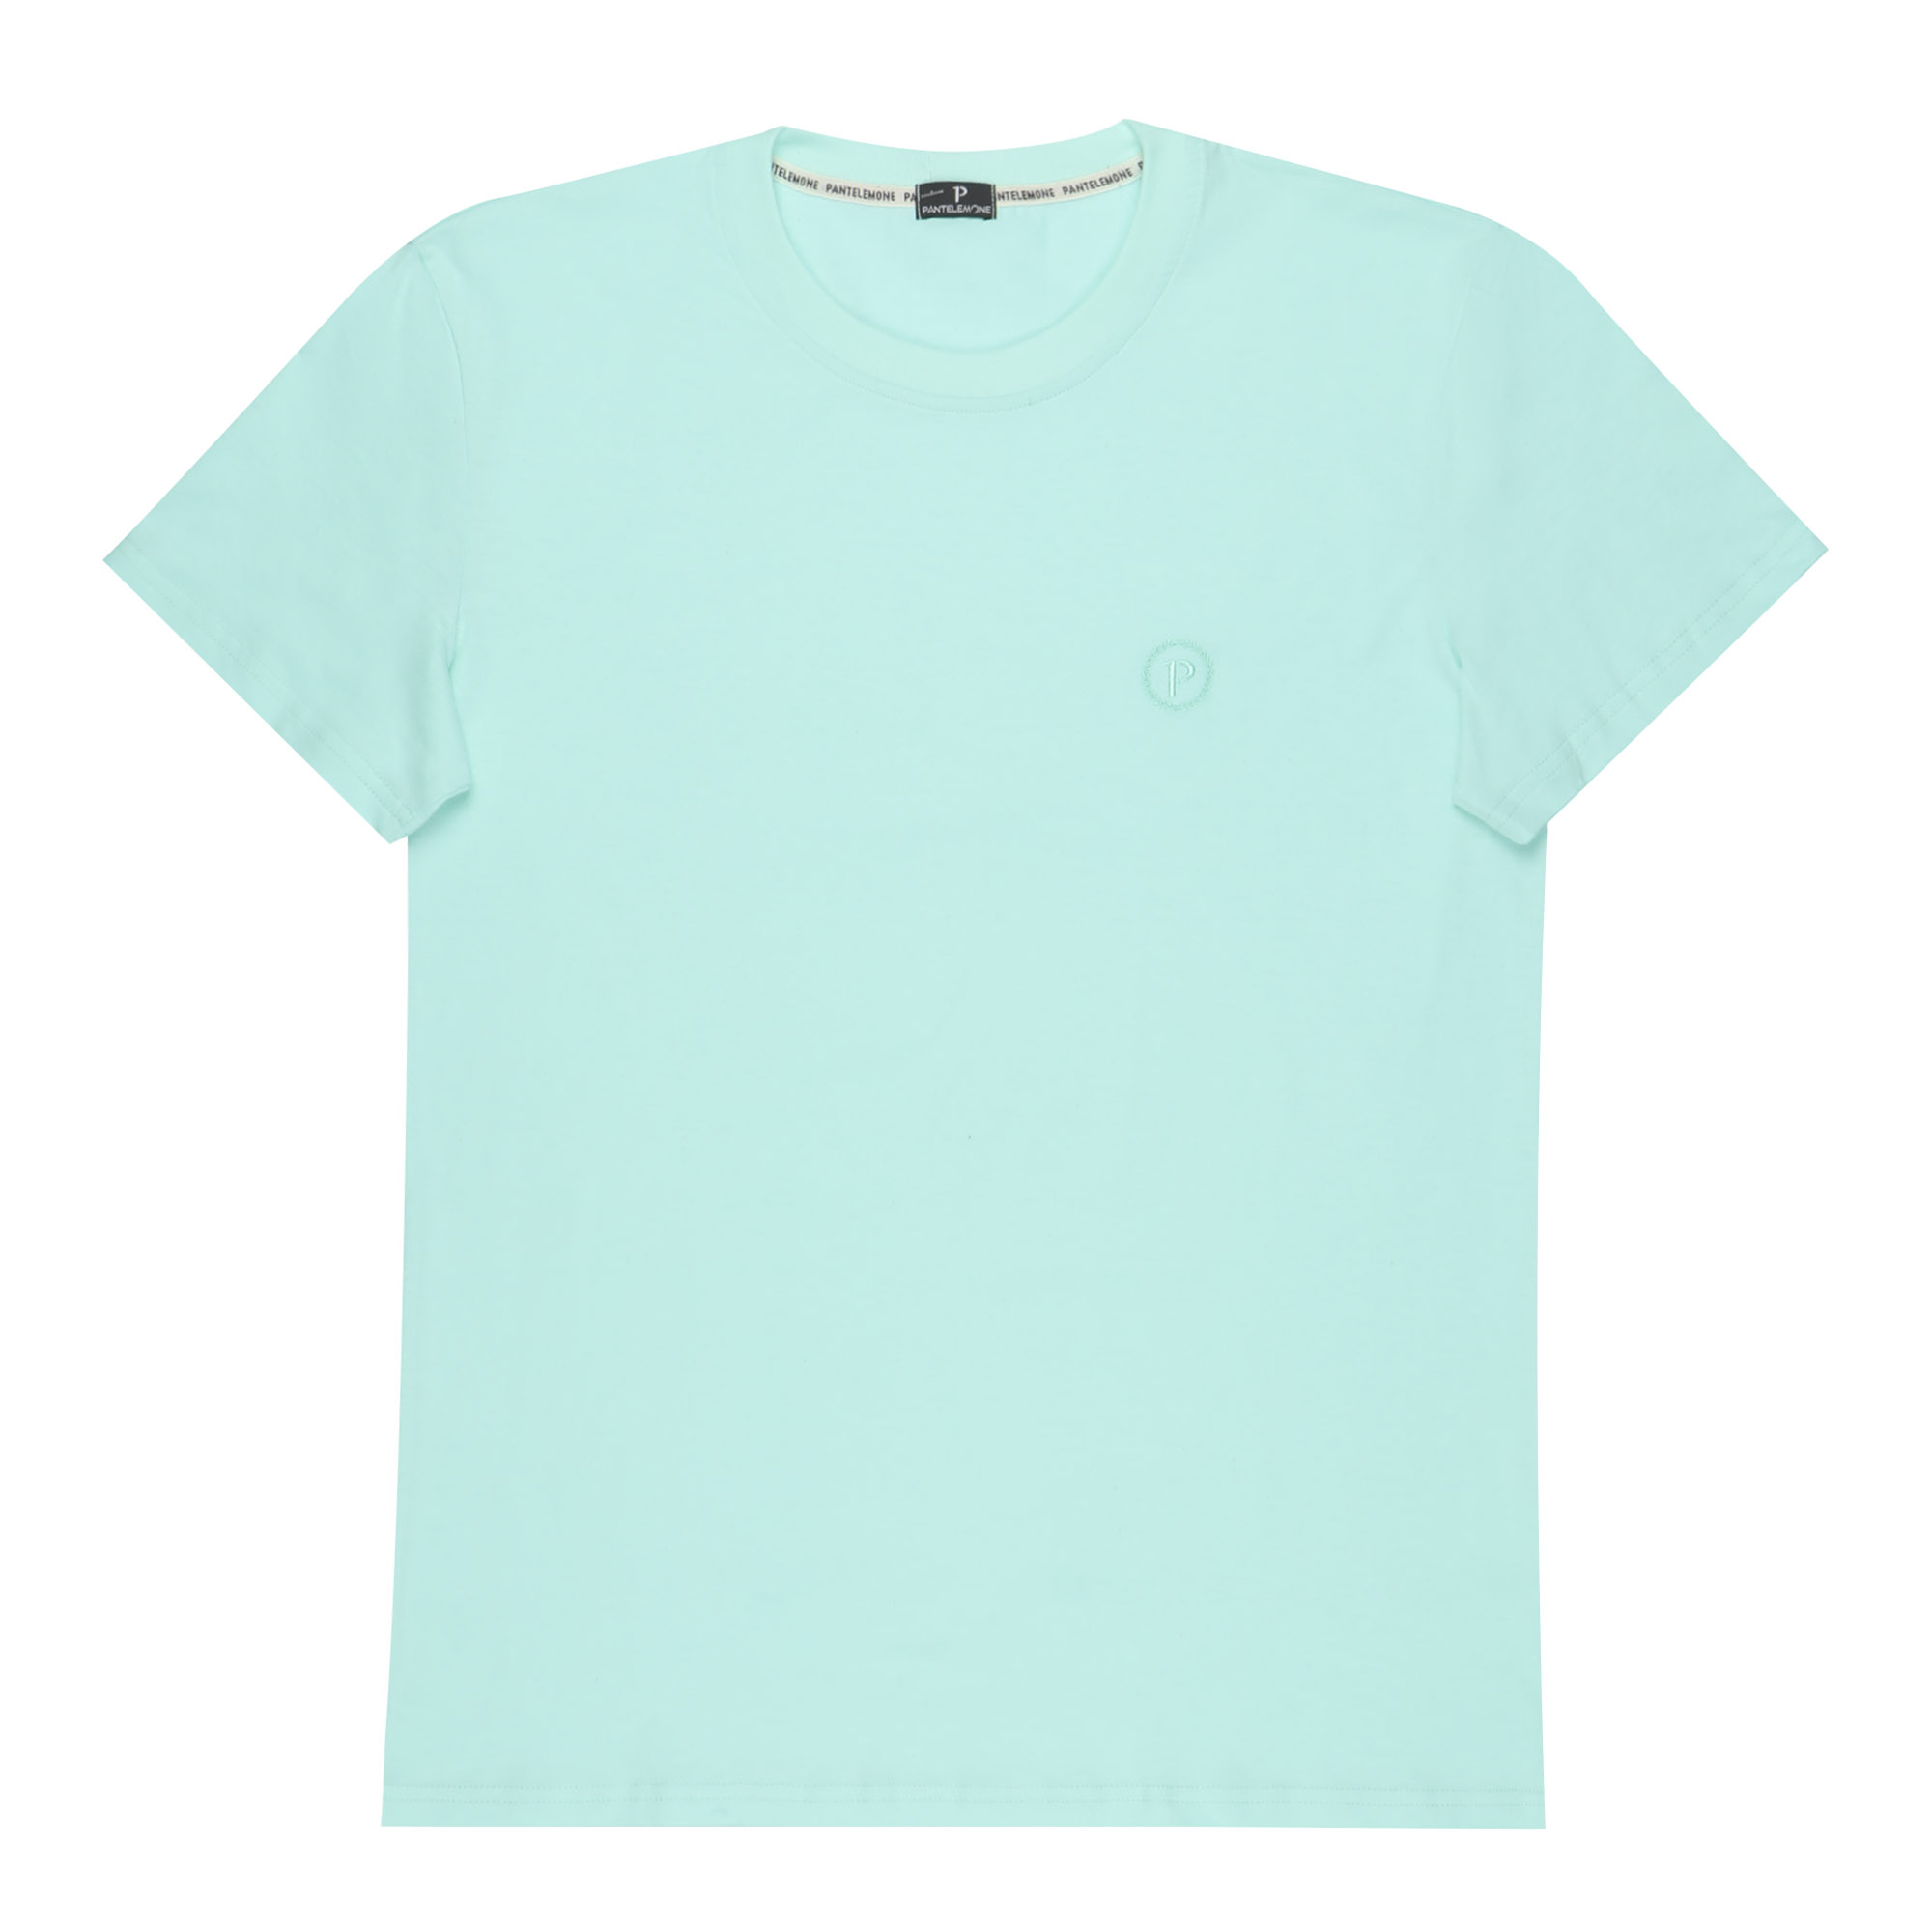 Мужская футболка Pantelemone MF-913 46 ментоловая, цвет ментоловый, размер 46 - фото 1